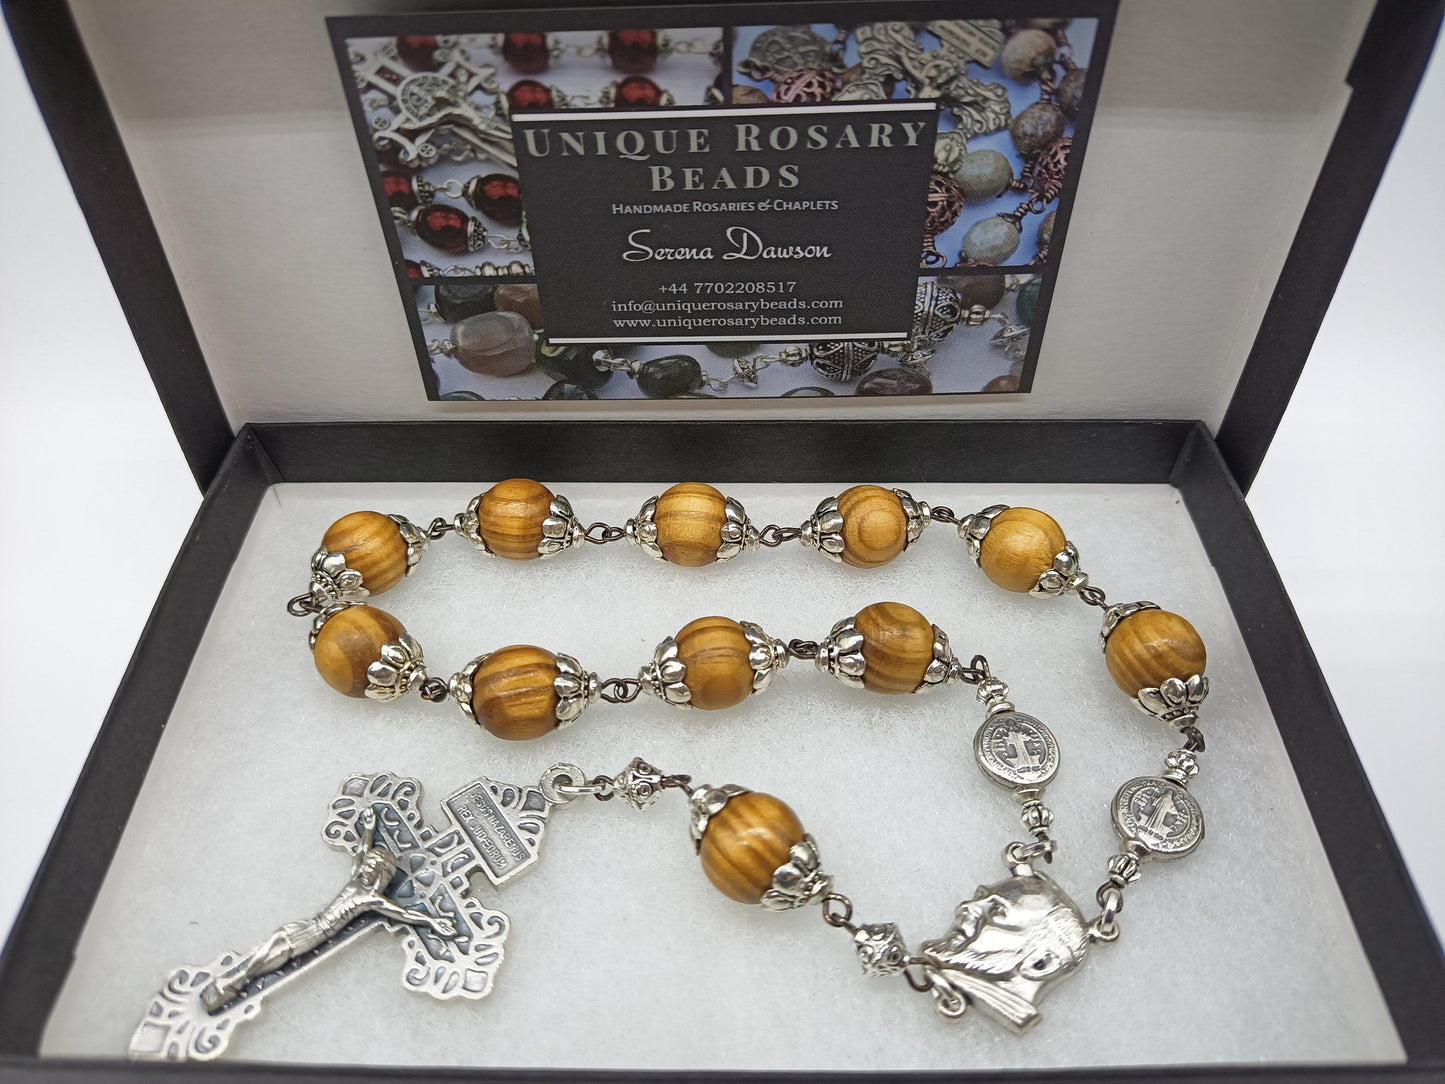 Saint Padre Pio large wooden single decade rosary, Men's tenner rosary beads, Pardon Crucifix Travel Rosary beads, Pocket Rosary beads.